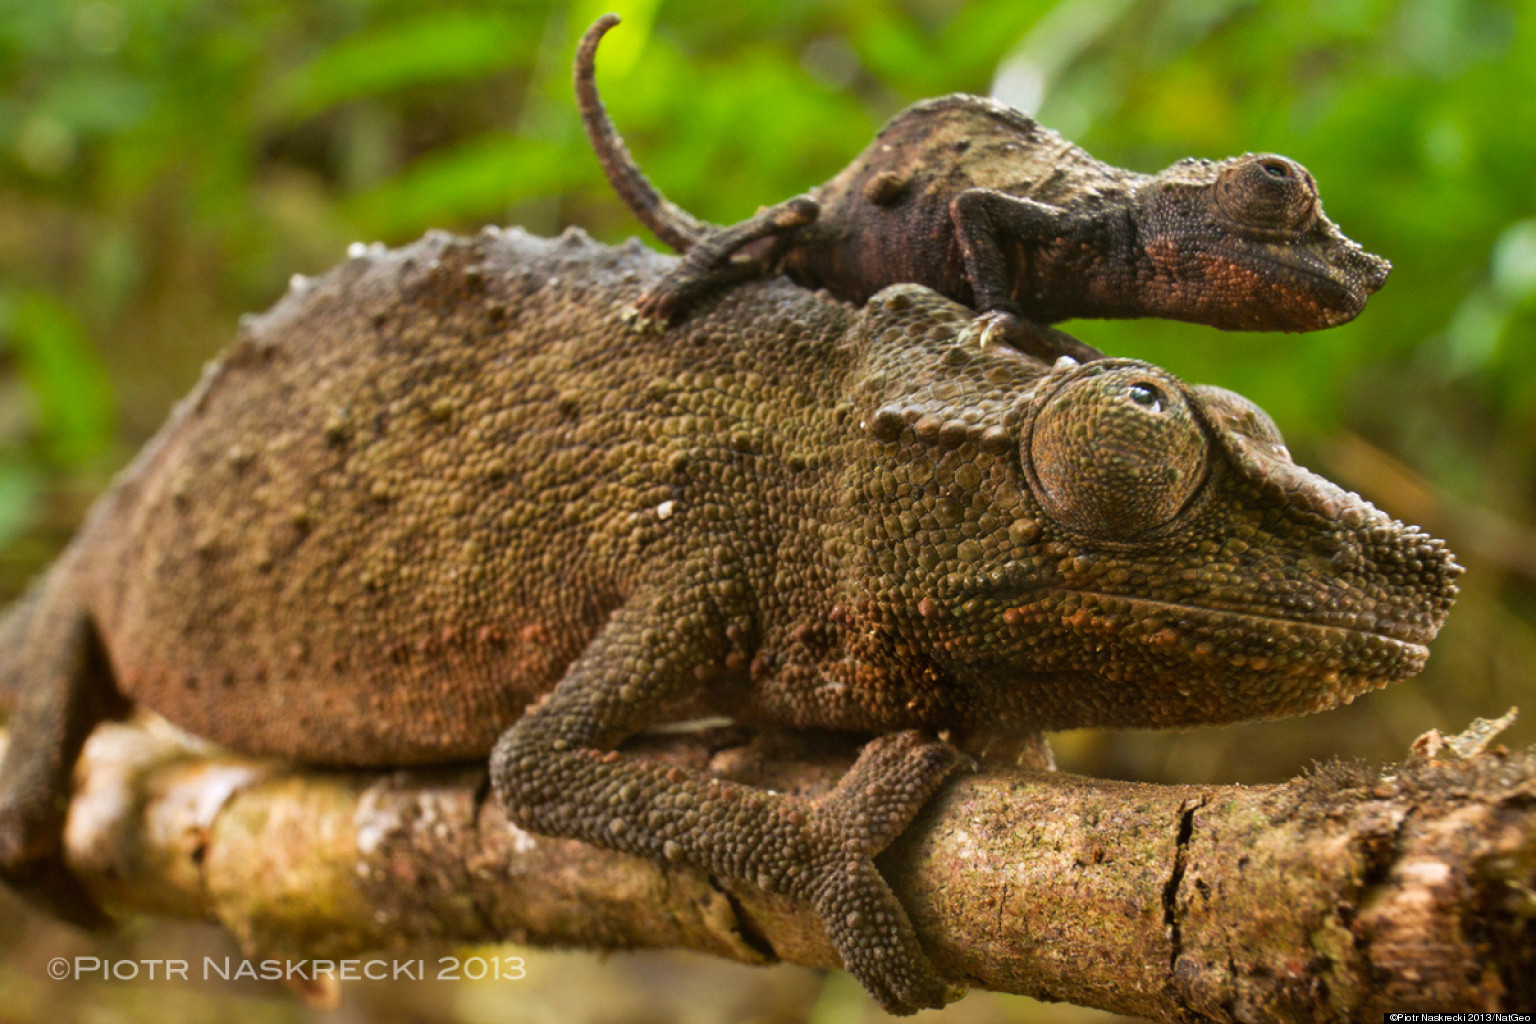 Pygmy Chameleon Photos Show Stunning Creature In Natural Habitat